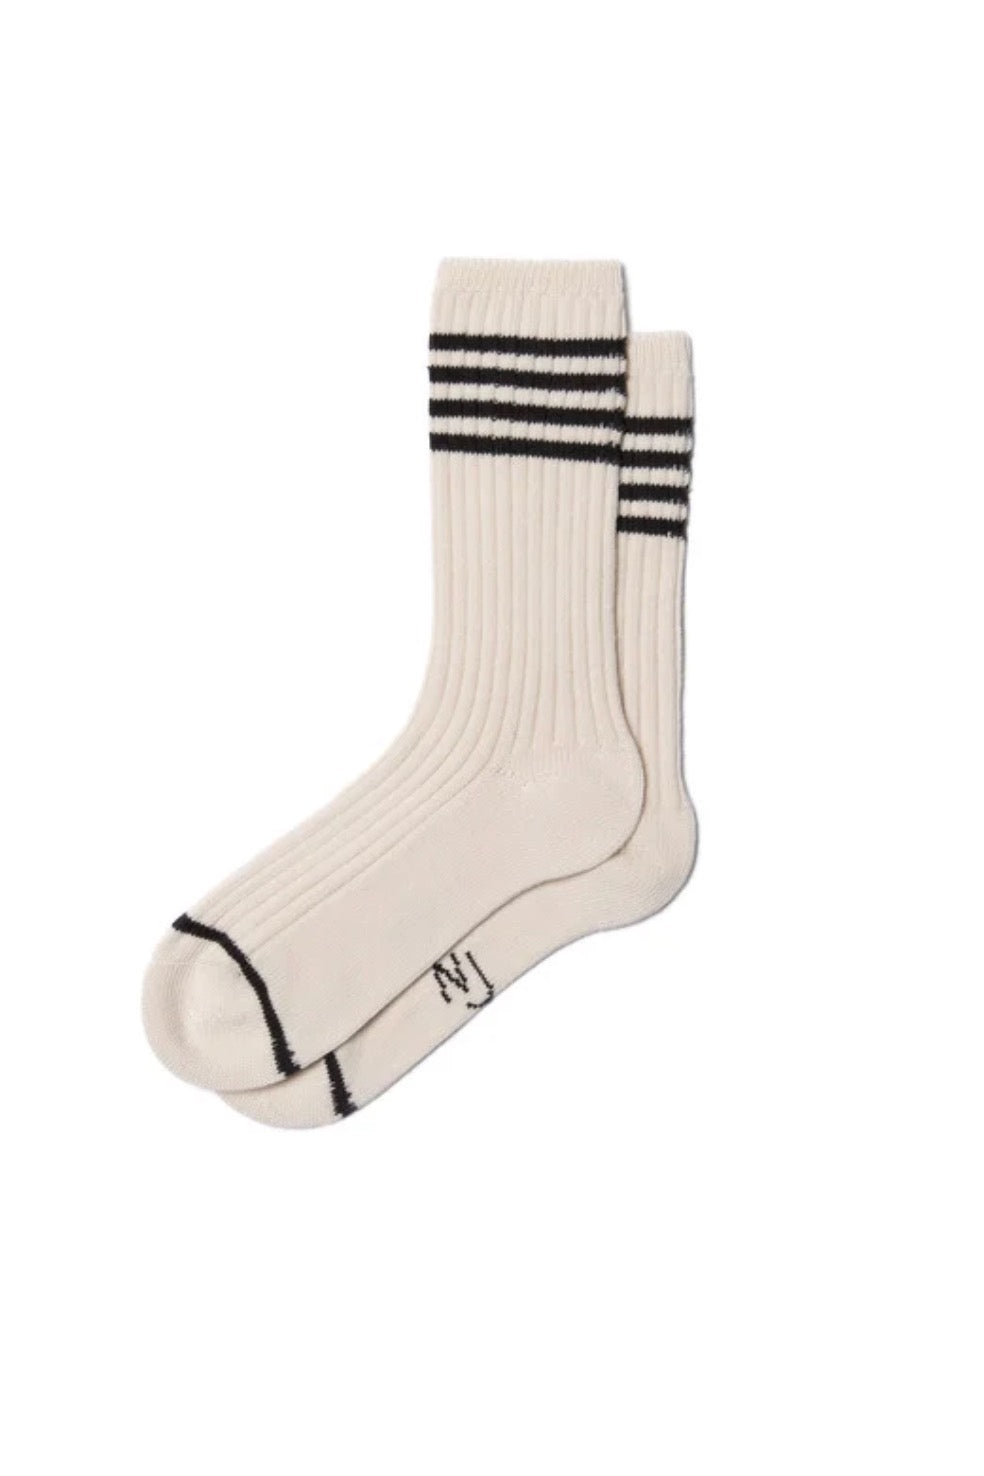 MEN TENNIS Socks Stripe offwh/black